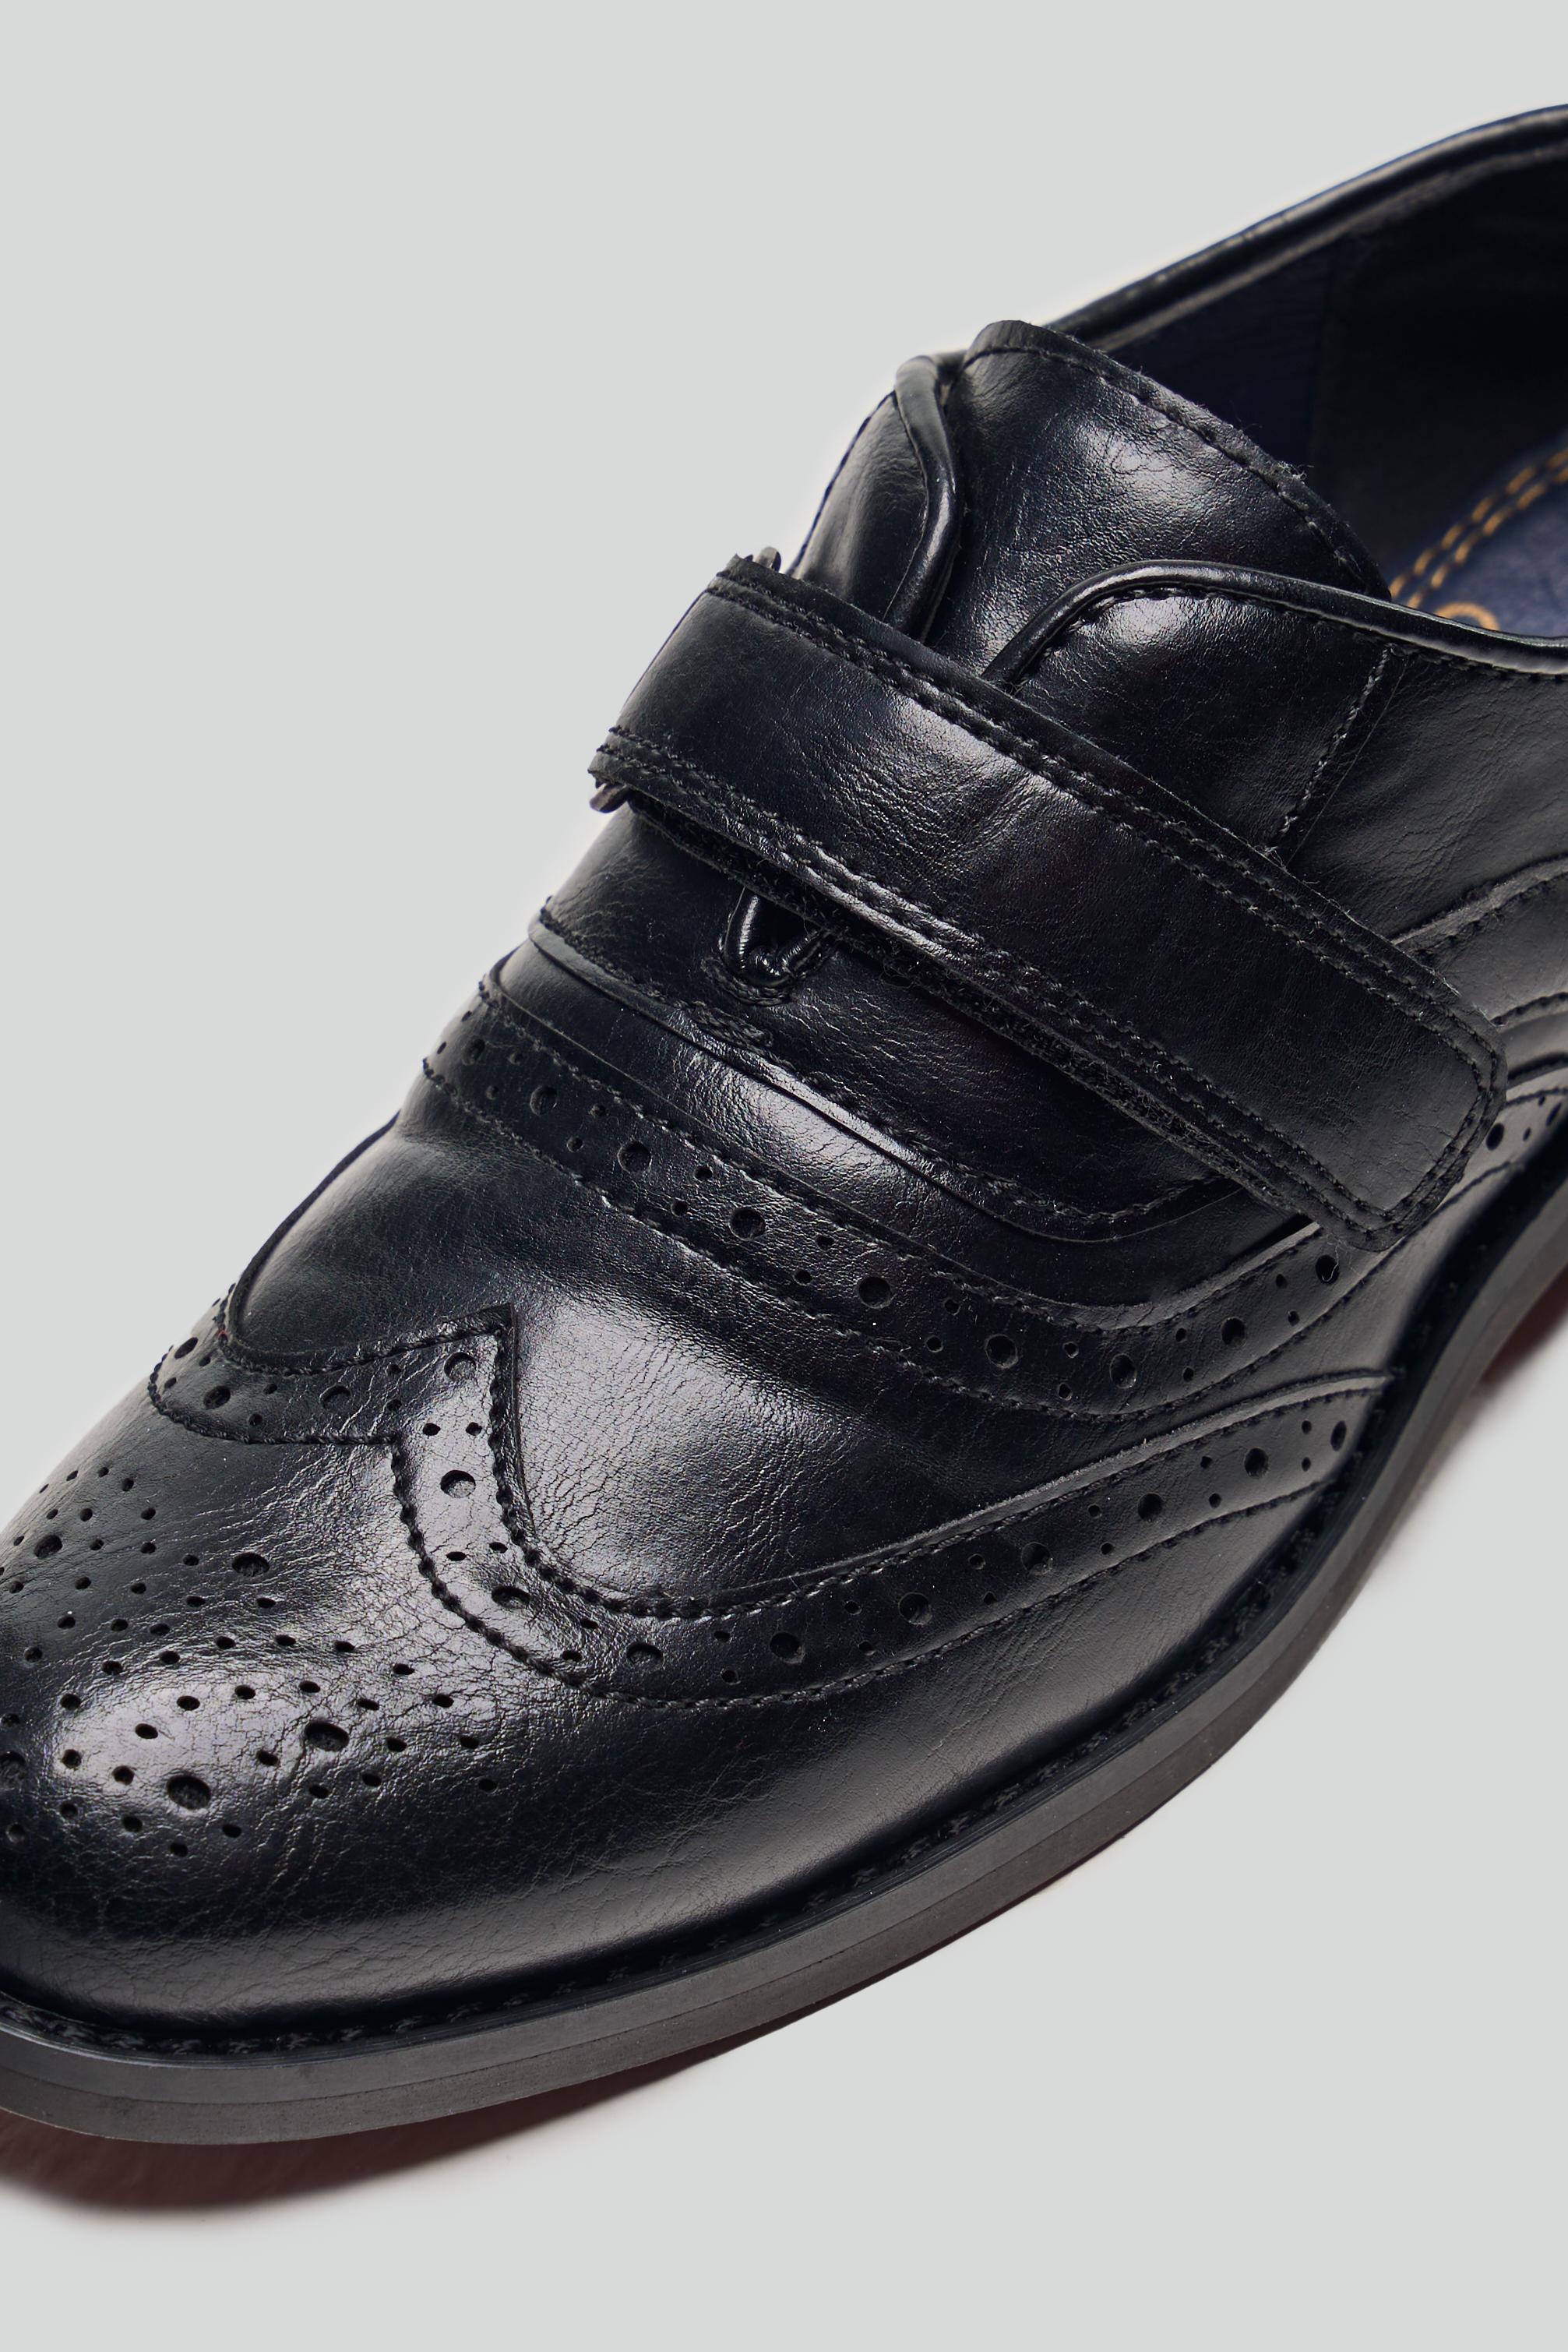 Boys Velcro Oxford Brogue Dress shoes - RUSSEL - Black